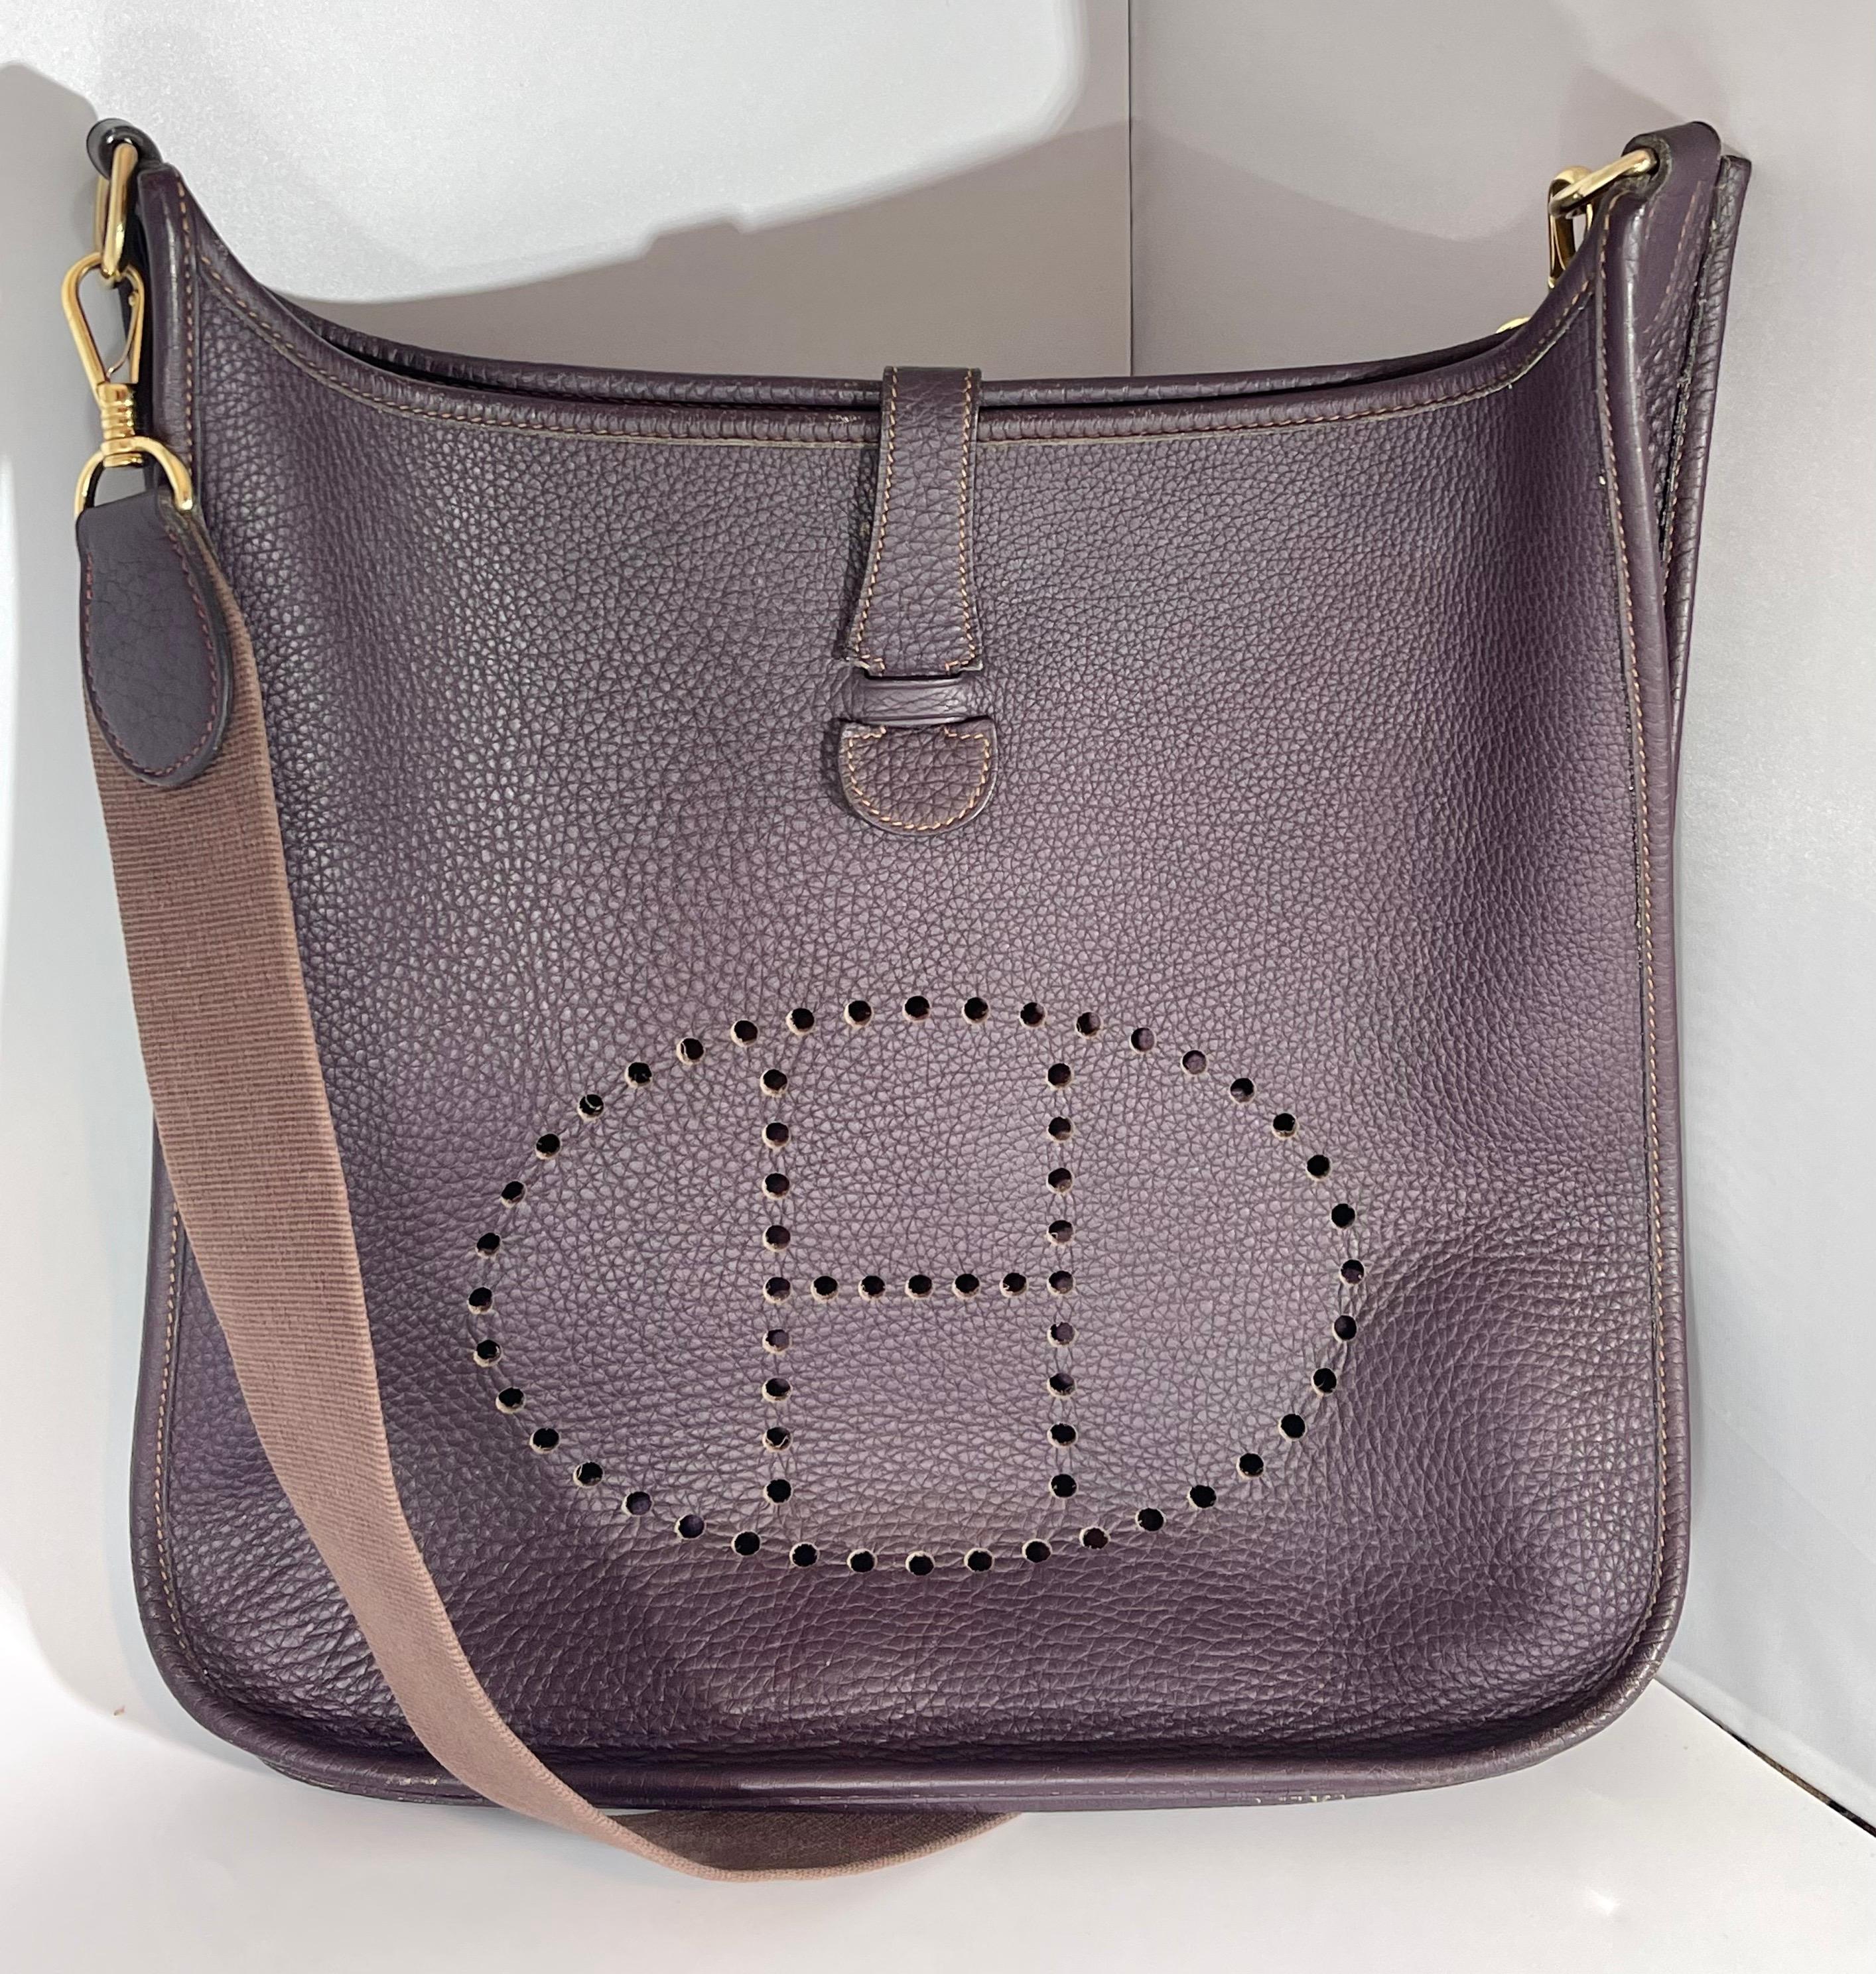 Hermès Evelyne Pm Dunkelbraun / Schokolade Leder Cross Body Bag wie neu im Angebot 5